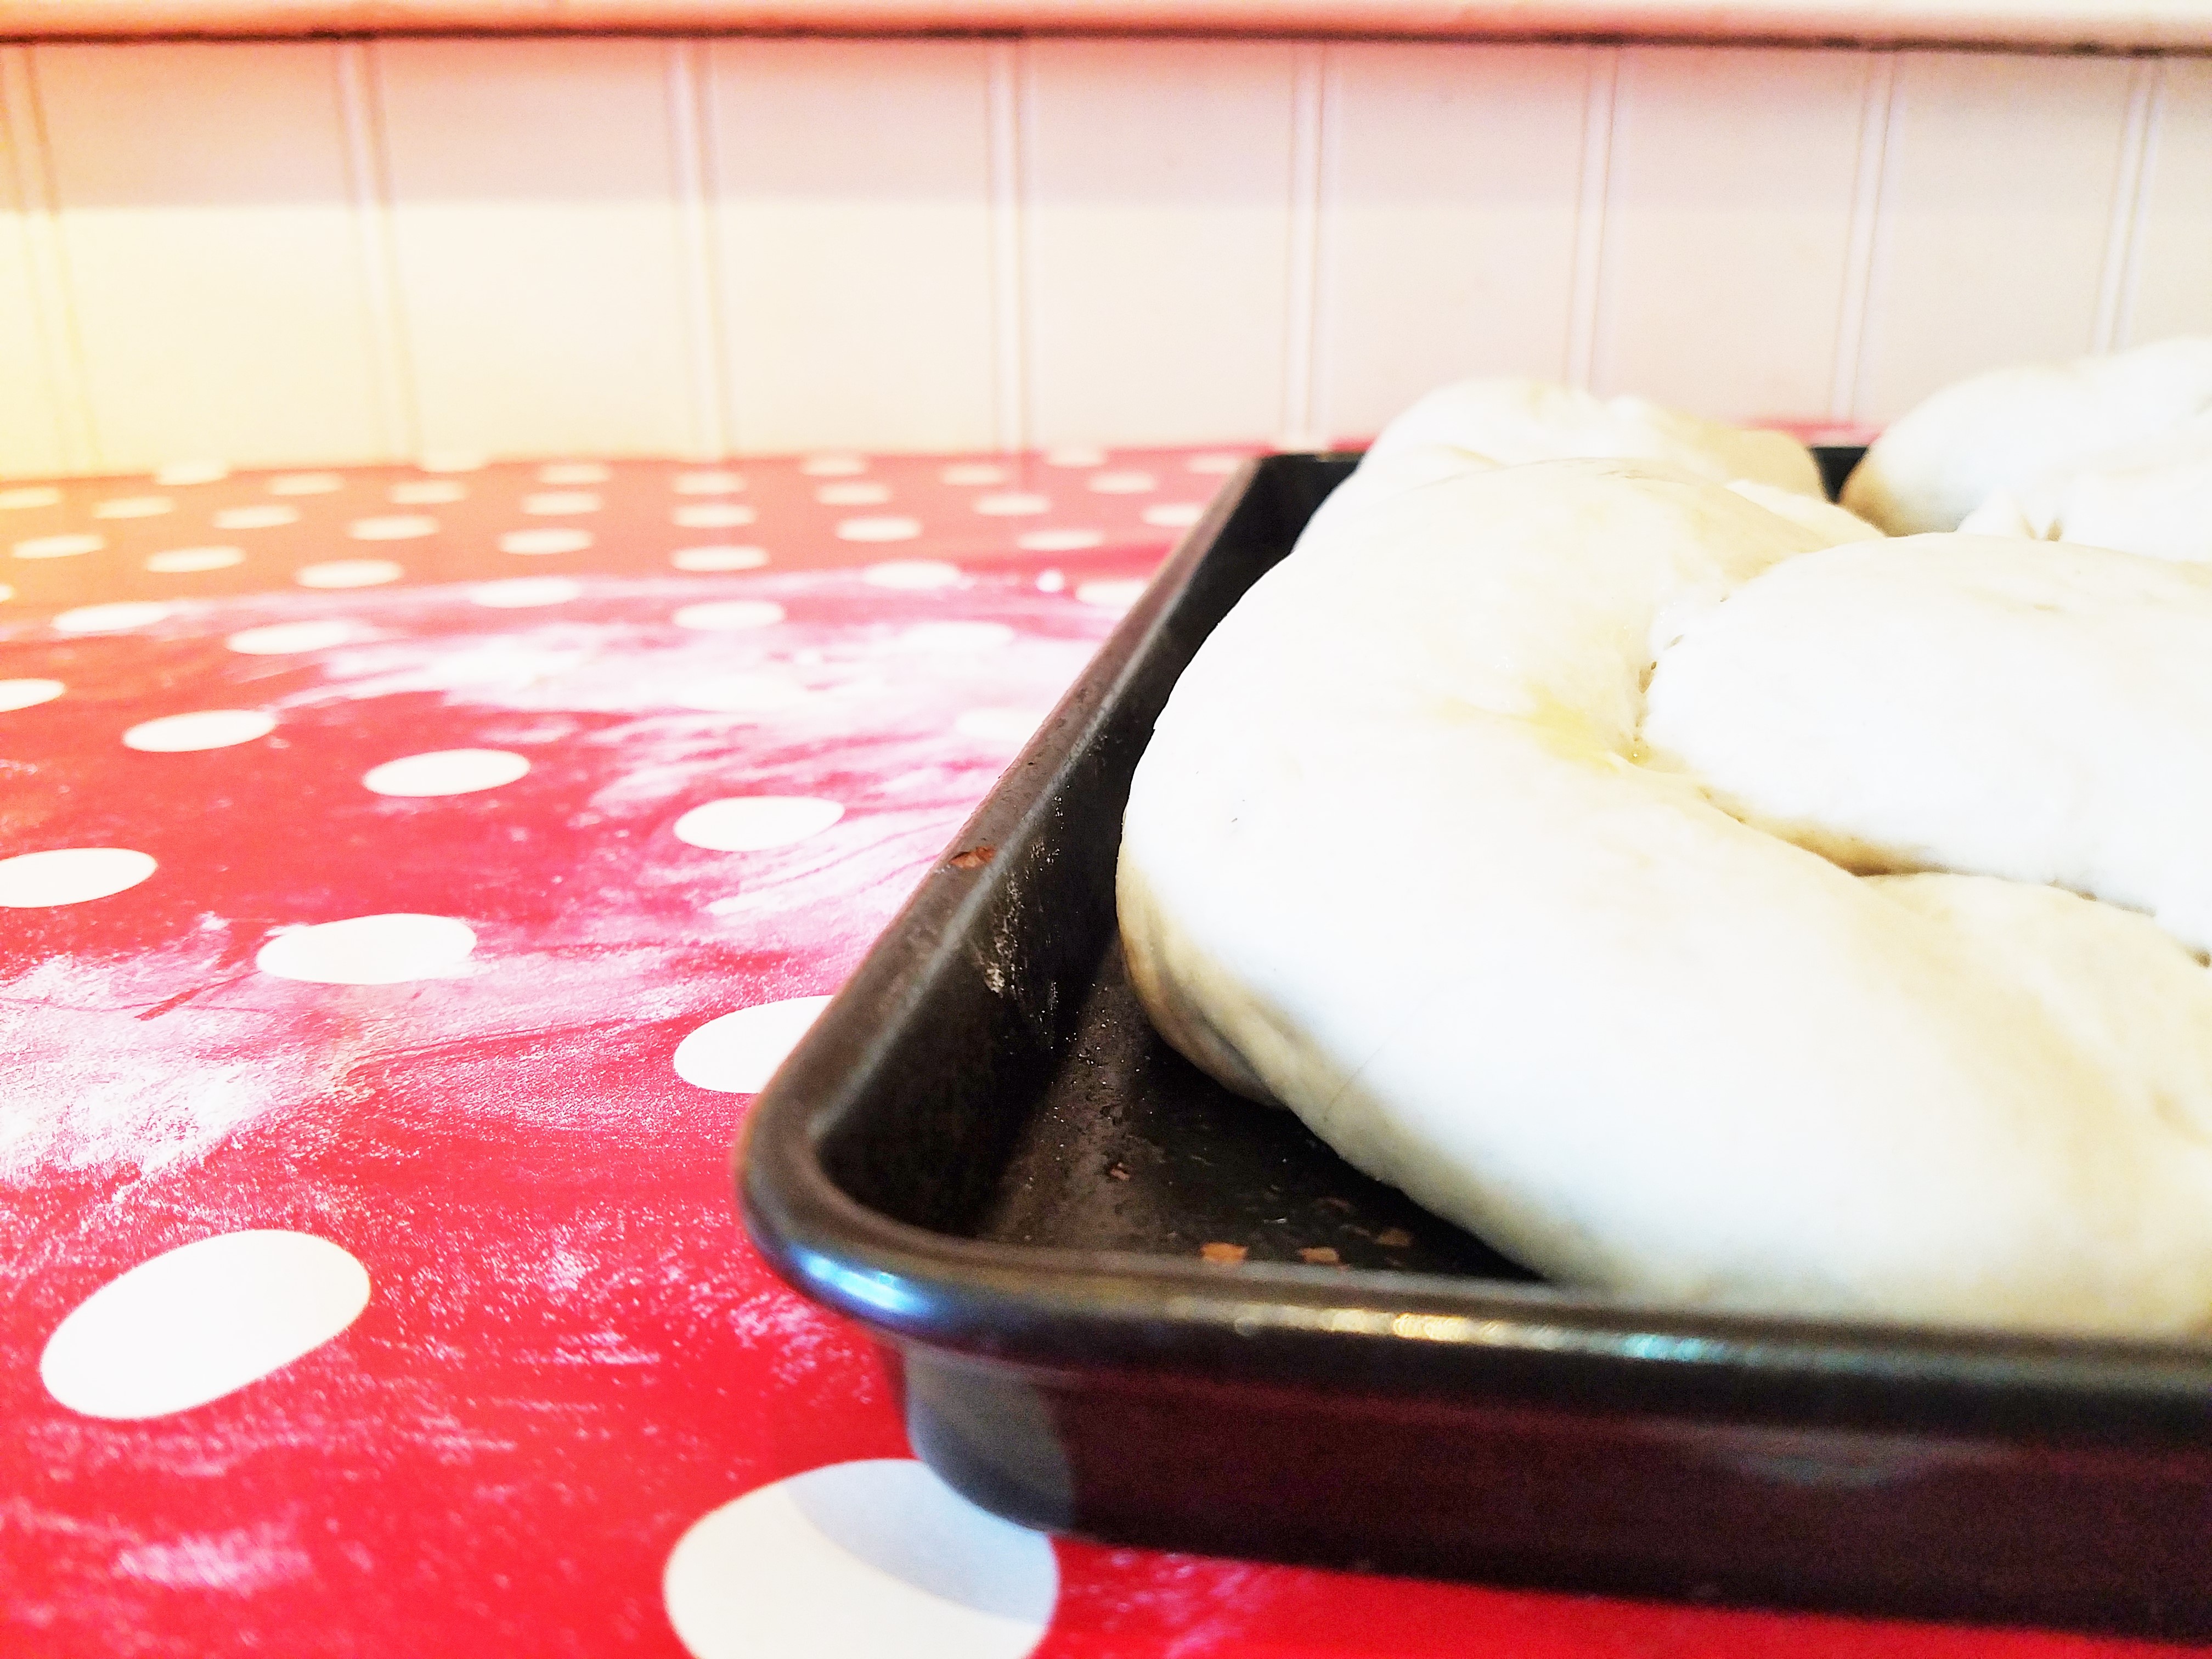 Bread maker dough on baking tray